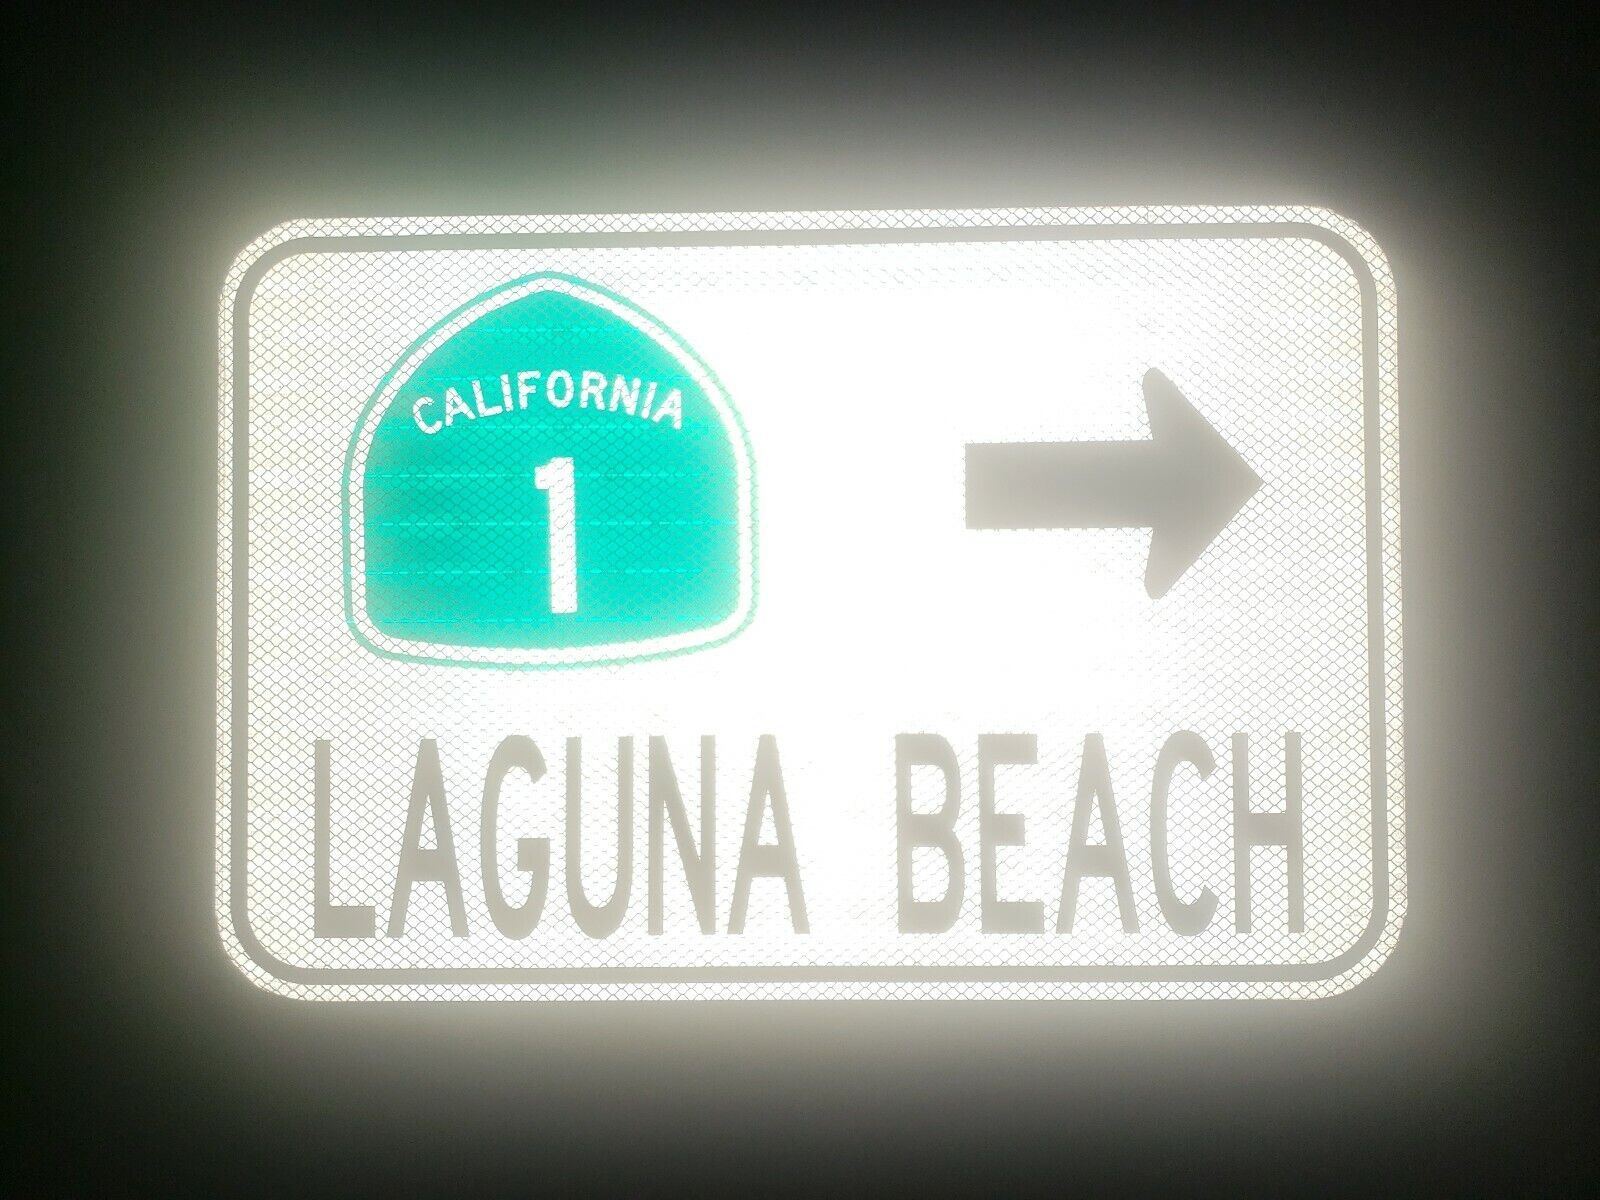 LAGUNA BEACH HWY 1 route road sign, Cal Trans -California Highway 1